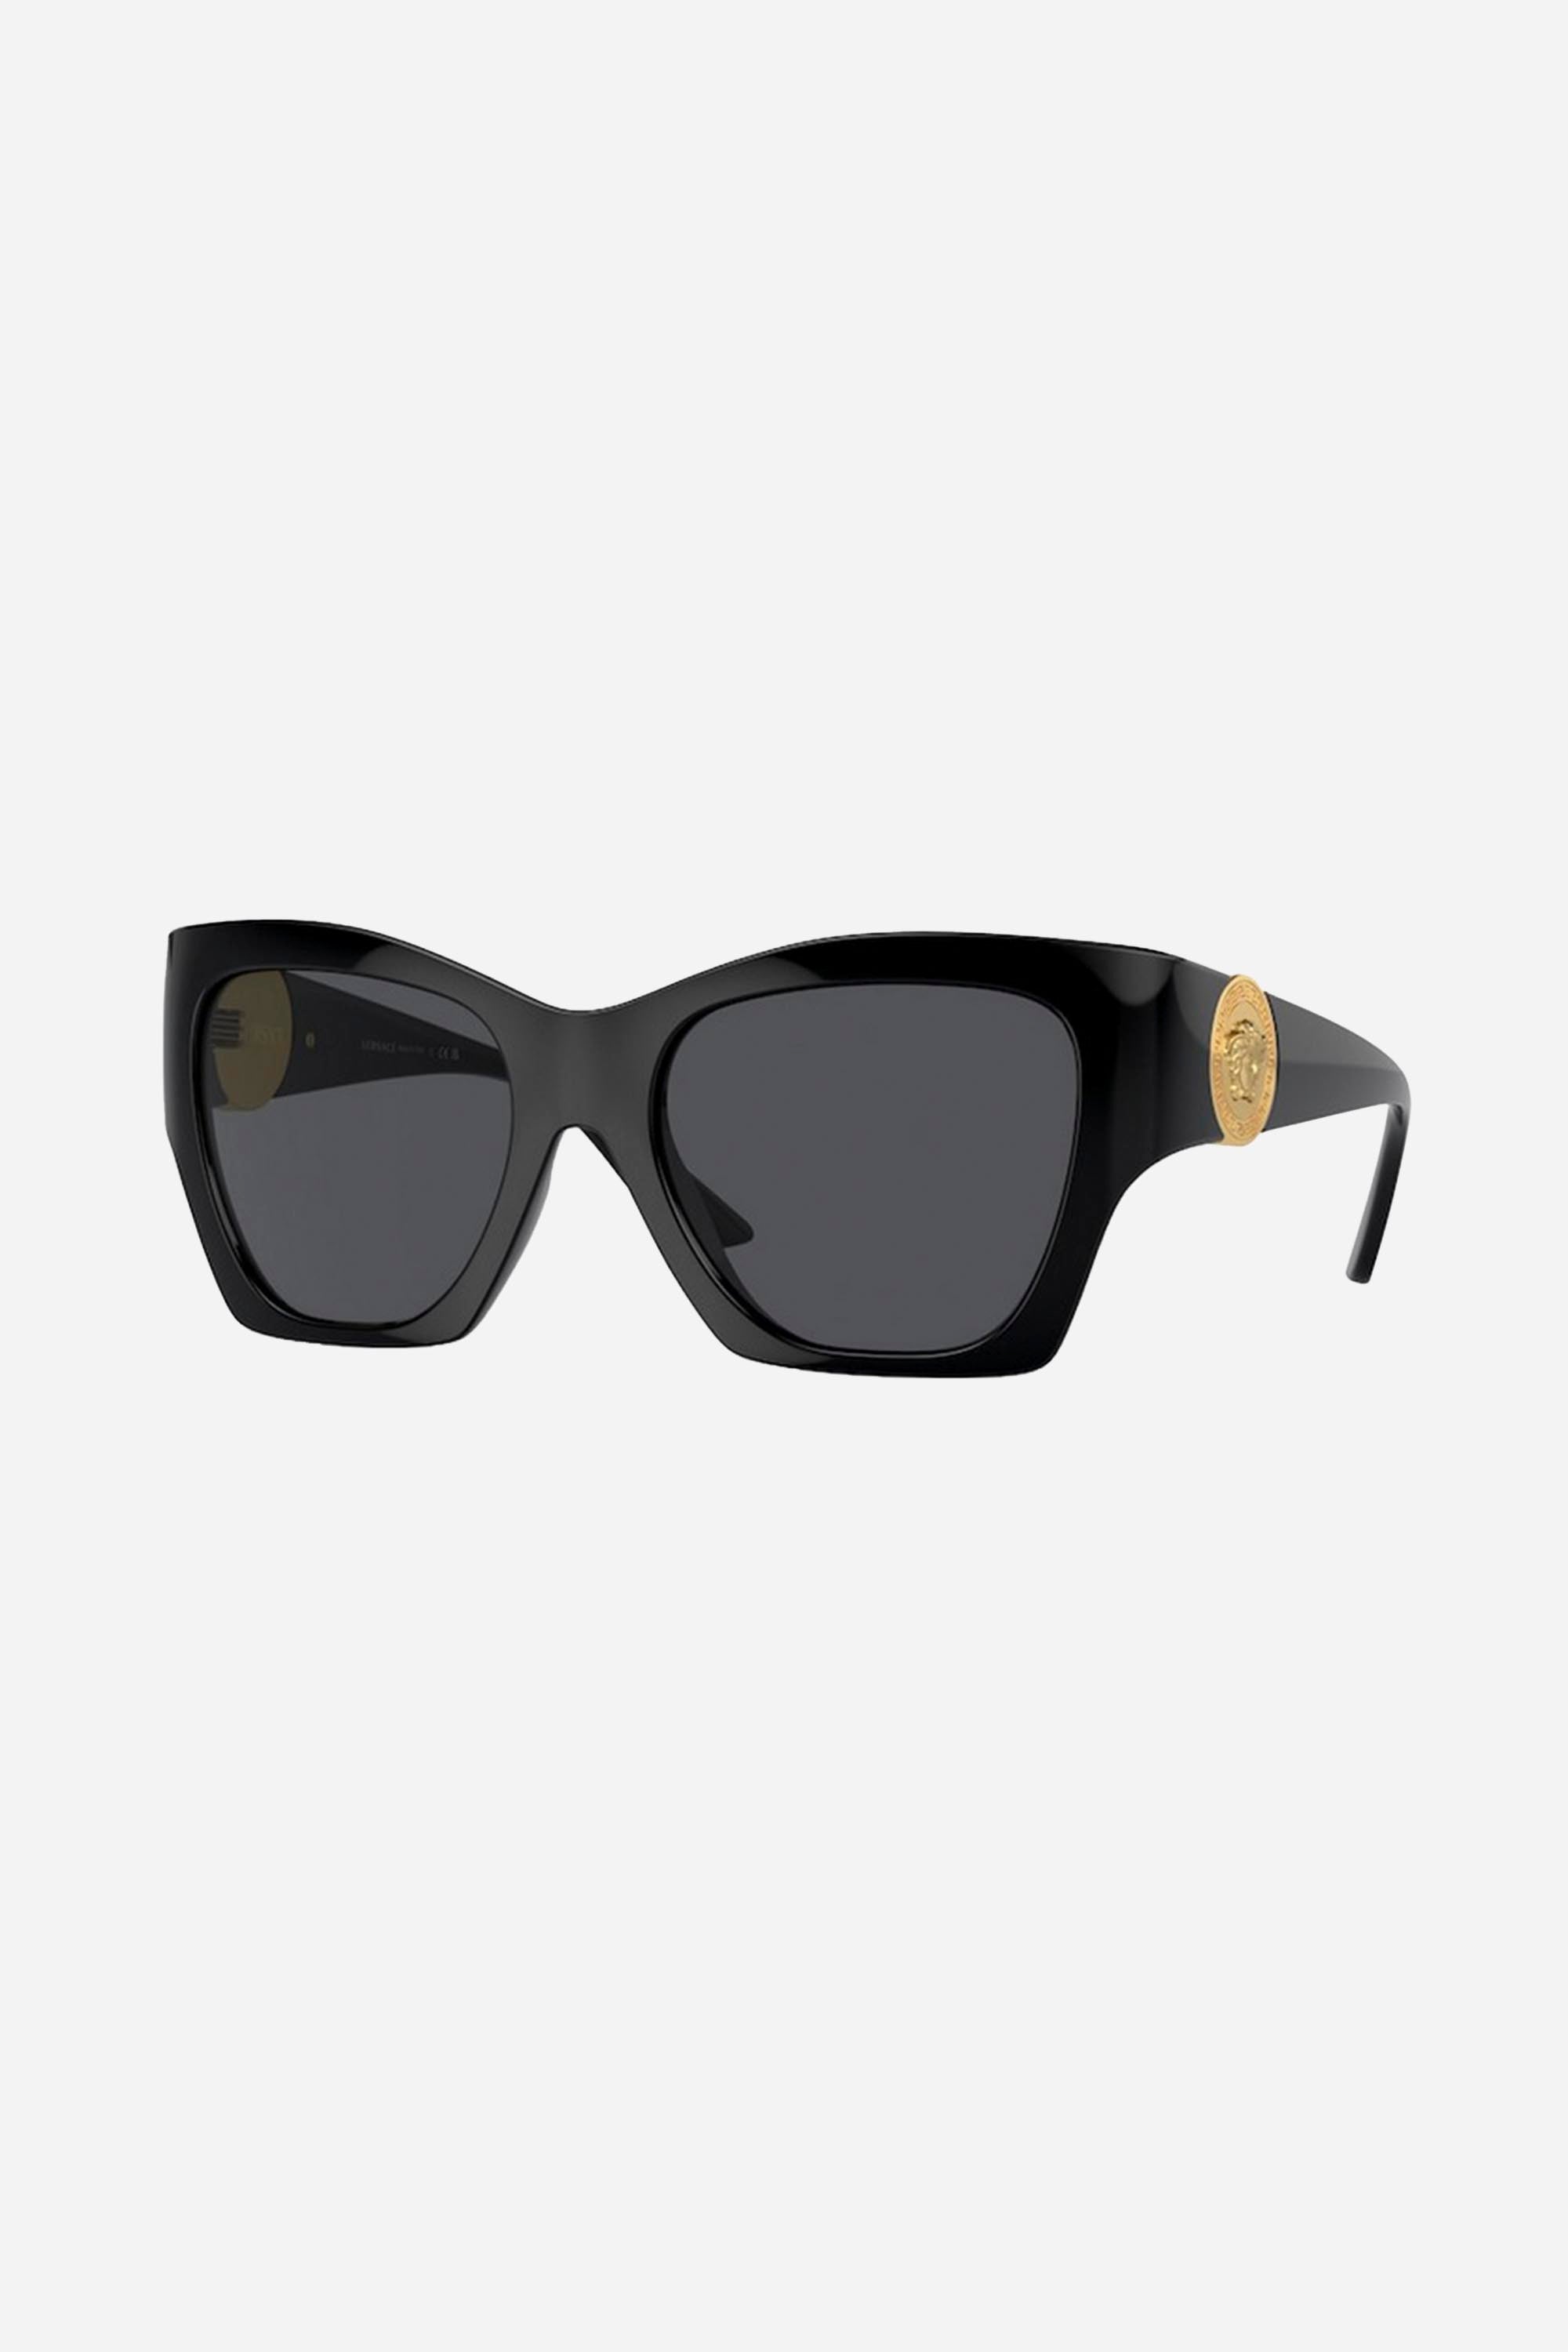 Versace cat-eye shade in black with iconic jellyfish - Eyewear Club